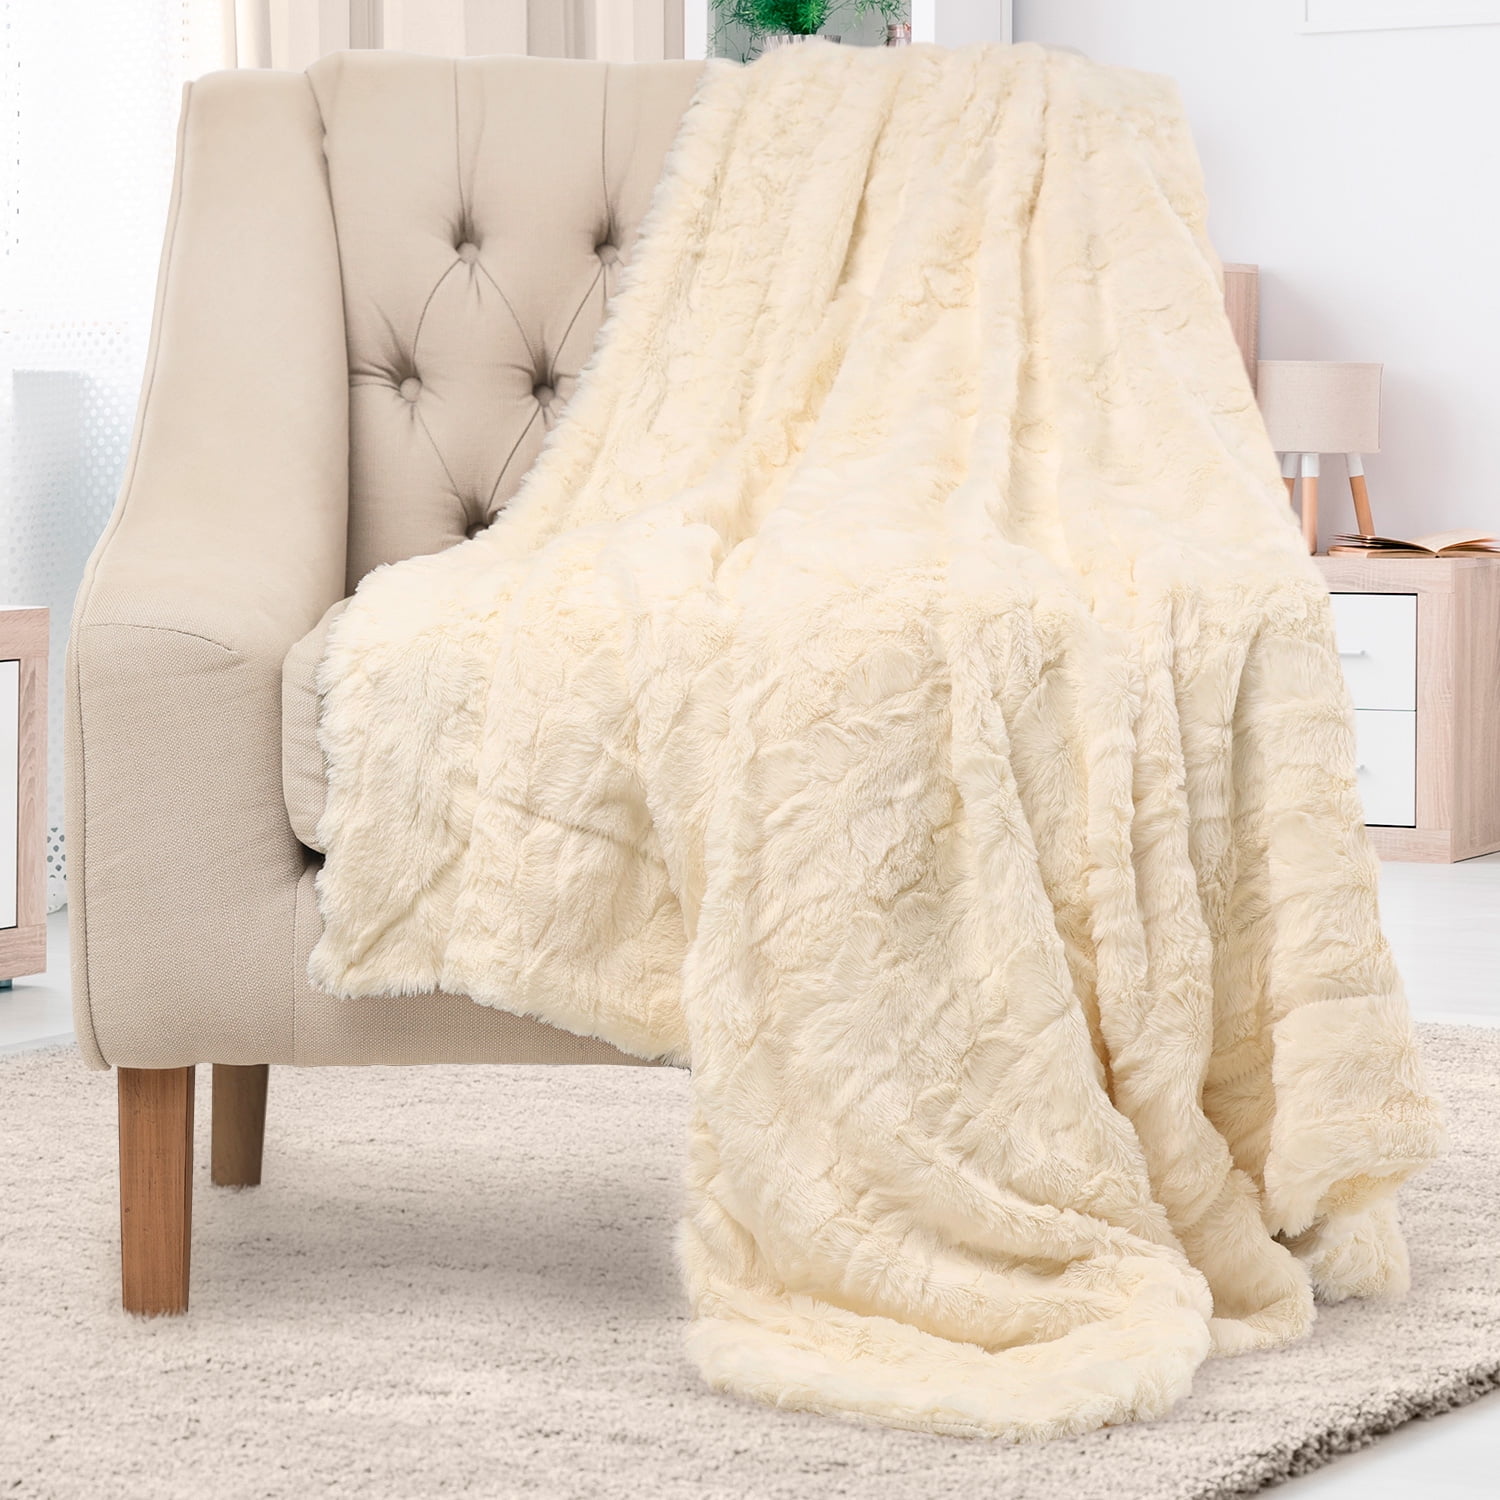 Rabbit Faux Fur Throw Cozy Super Soft Plush Chic Blanket Warm Bed Double King XL 